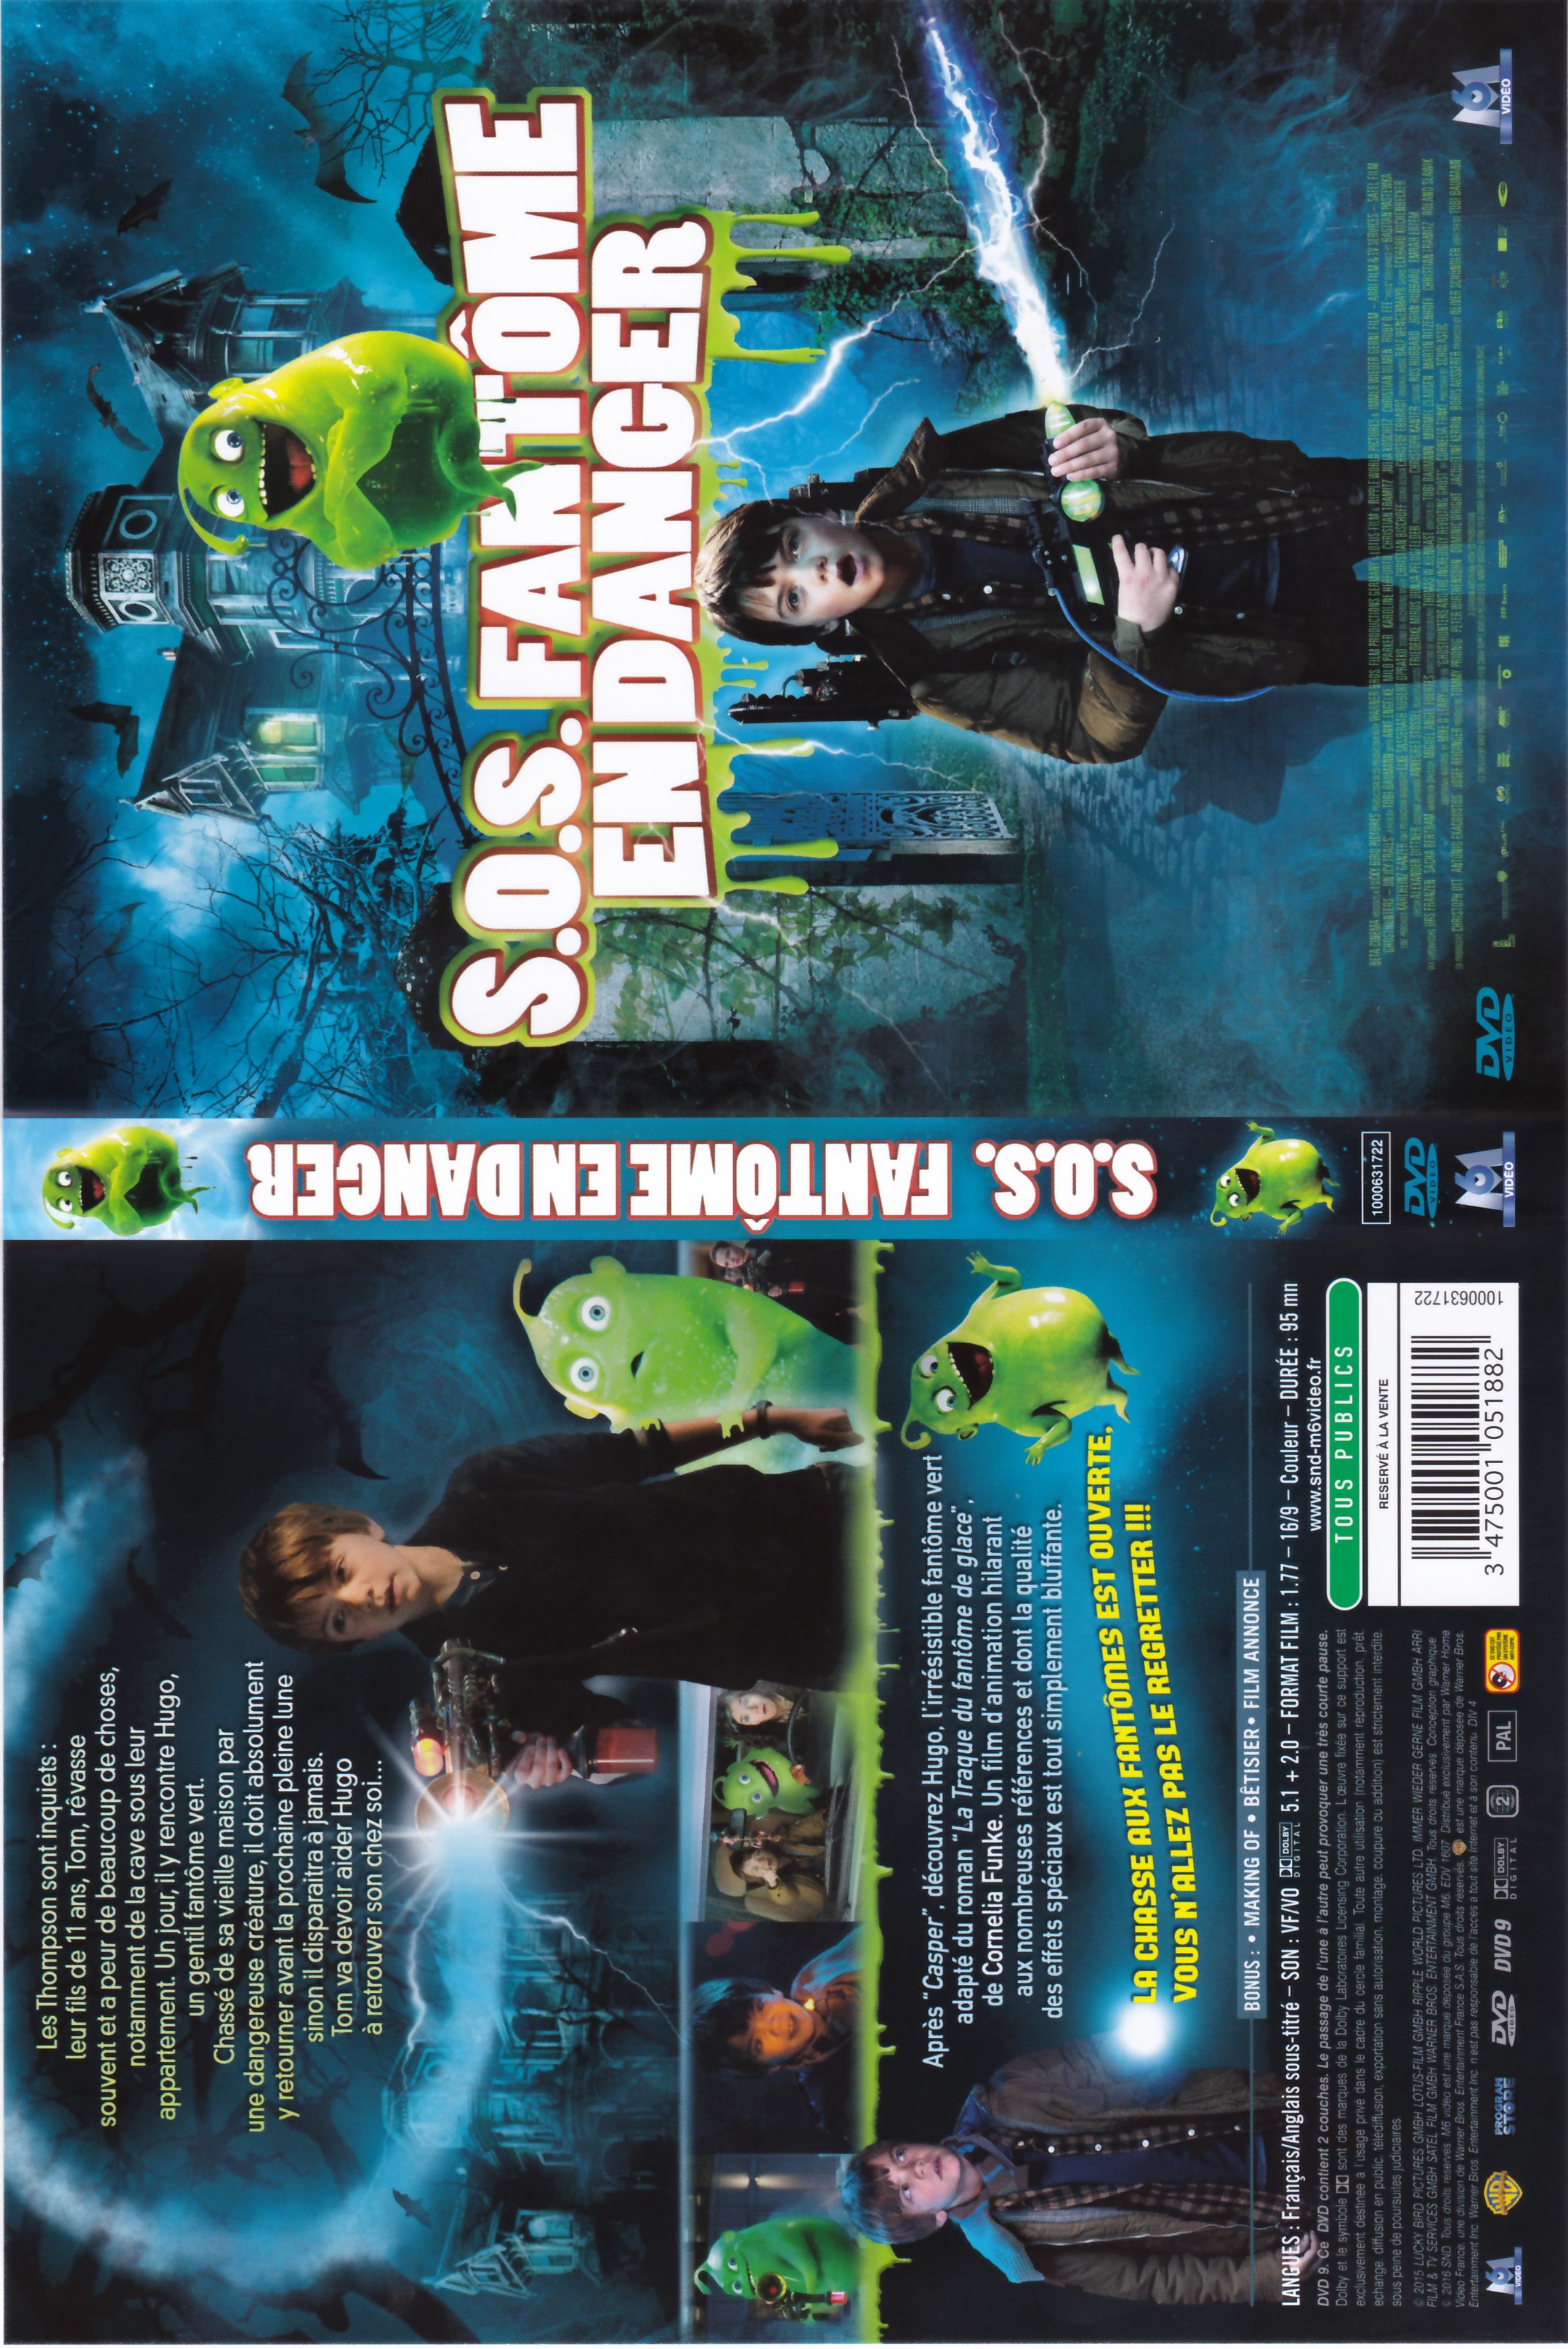 Jaquette DVD SOS Fantome en Danger